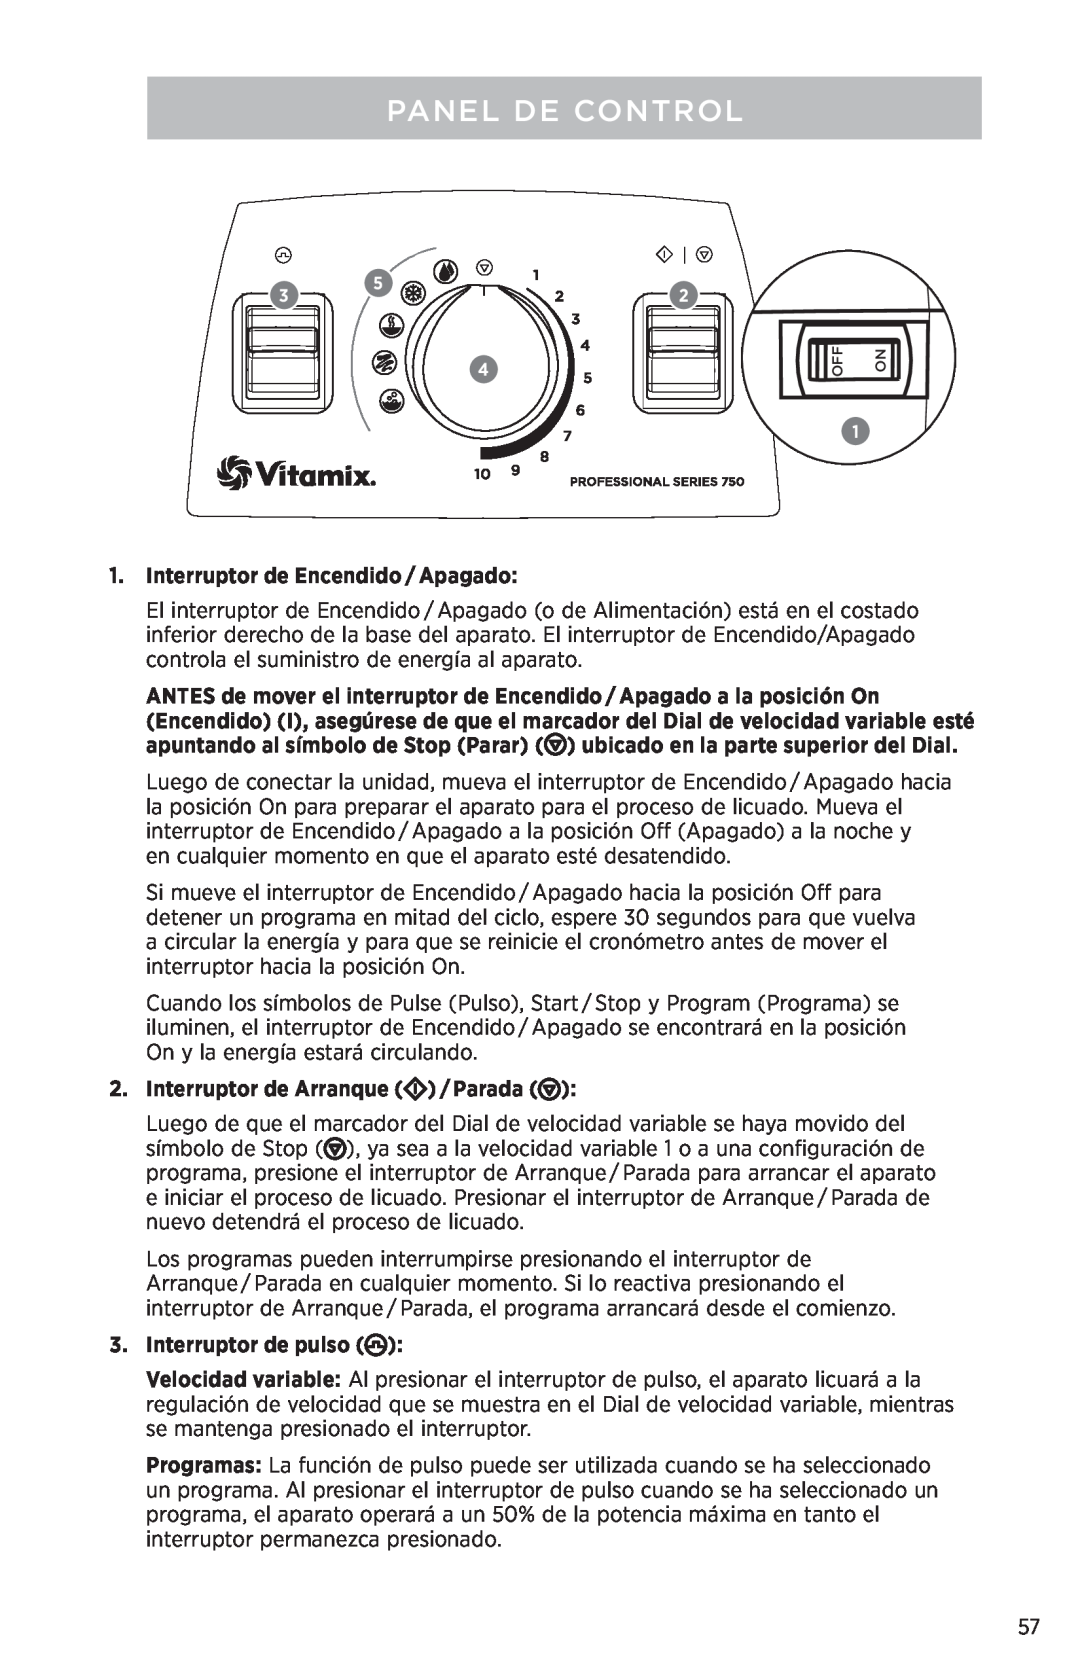 Vita-Mix PROFESSIONAL SERIES 750 Panel De Control, Interruptor de Encendido / Apagado, Interruptor de Arranque / Parada 